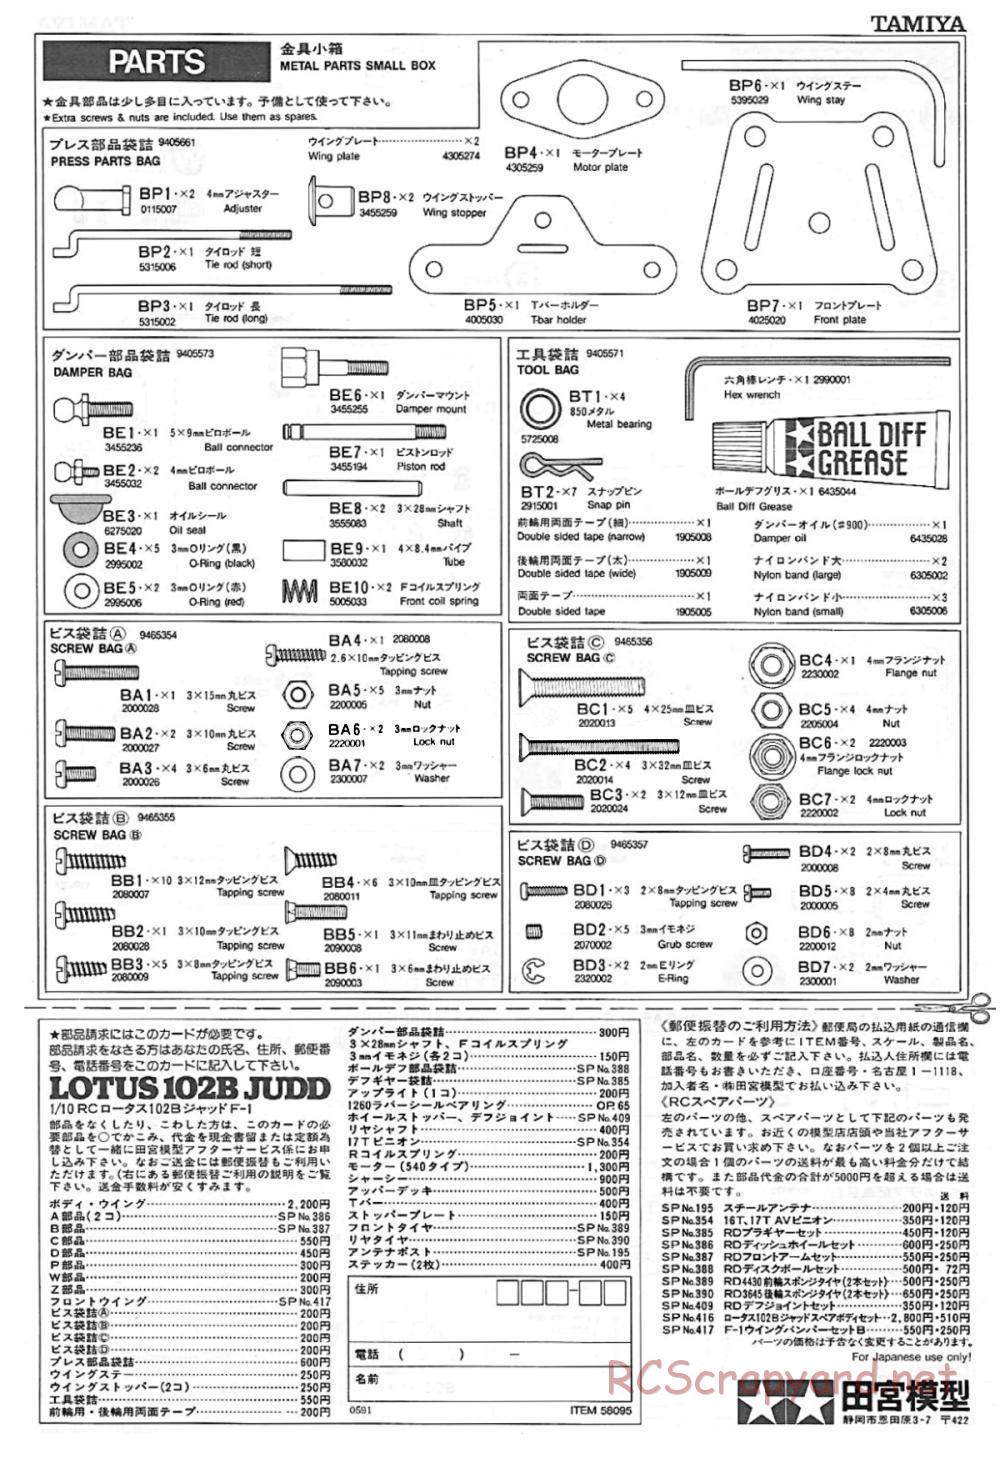 Tamiya - Lotus 102B Judd - 58095 - Manual - Page 18